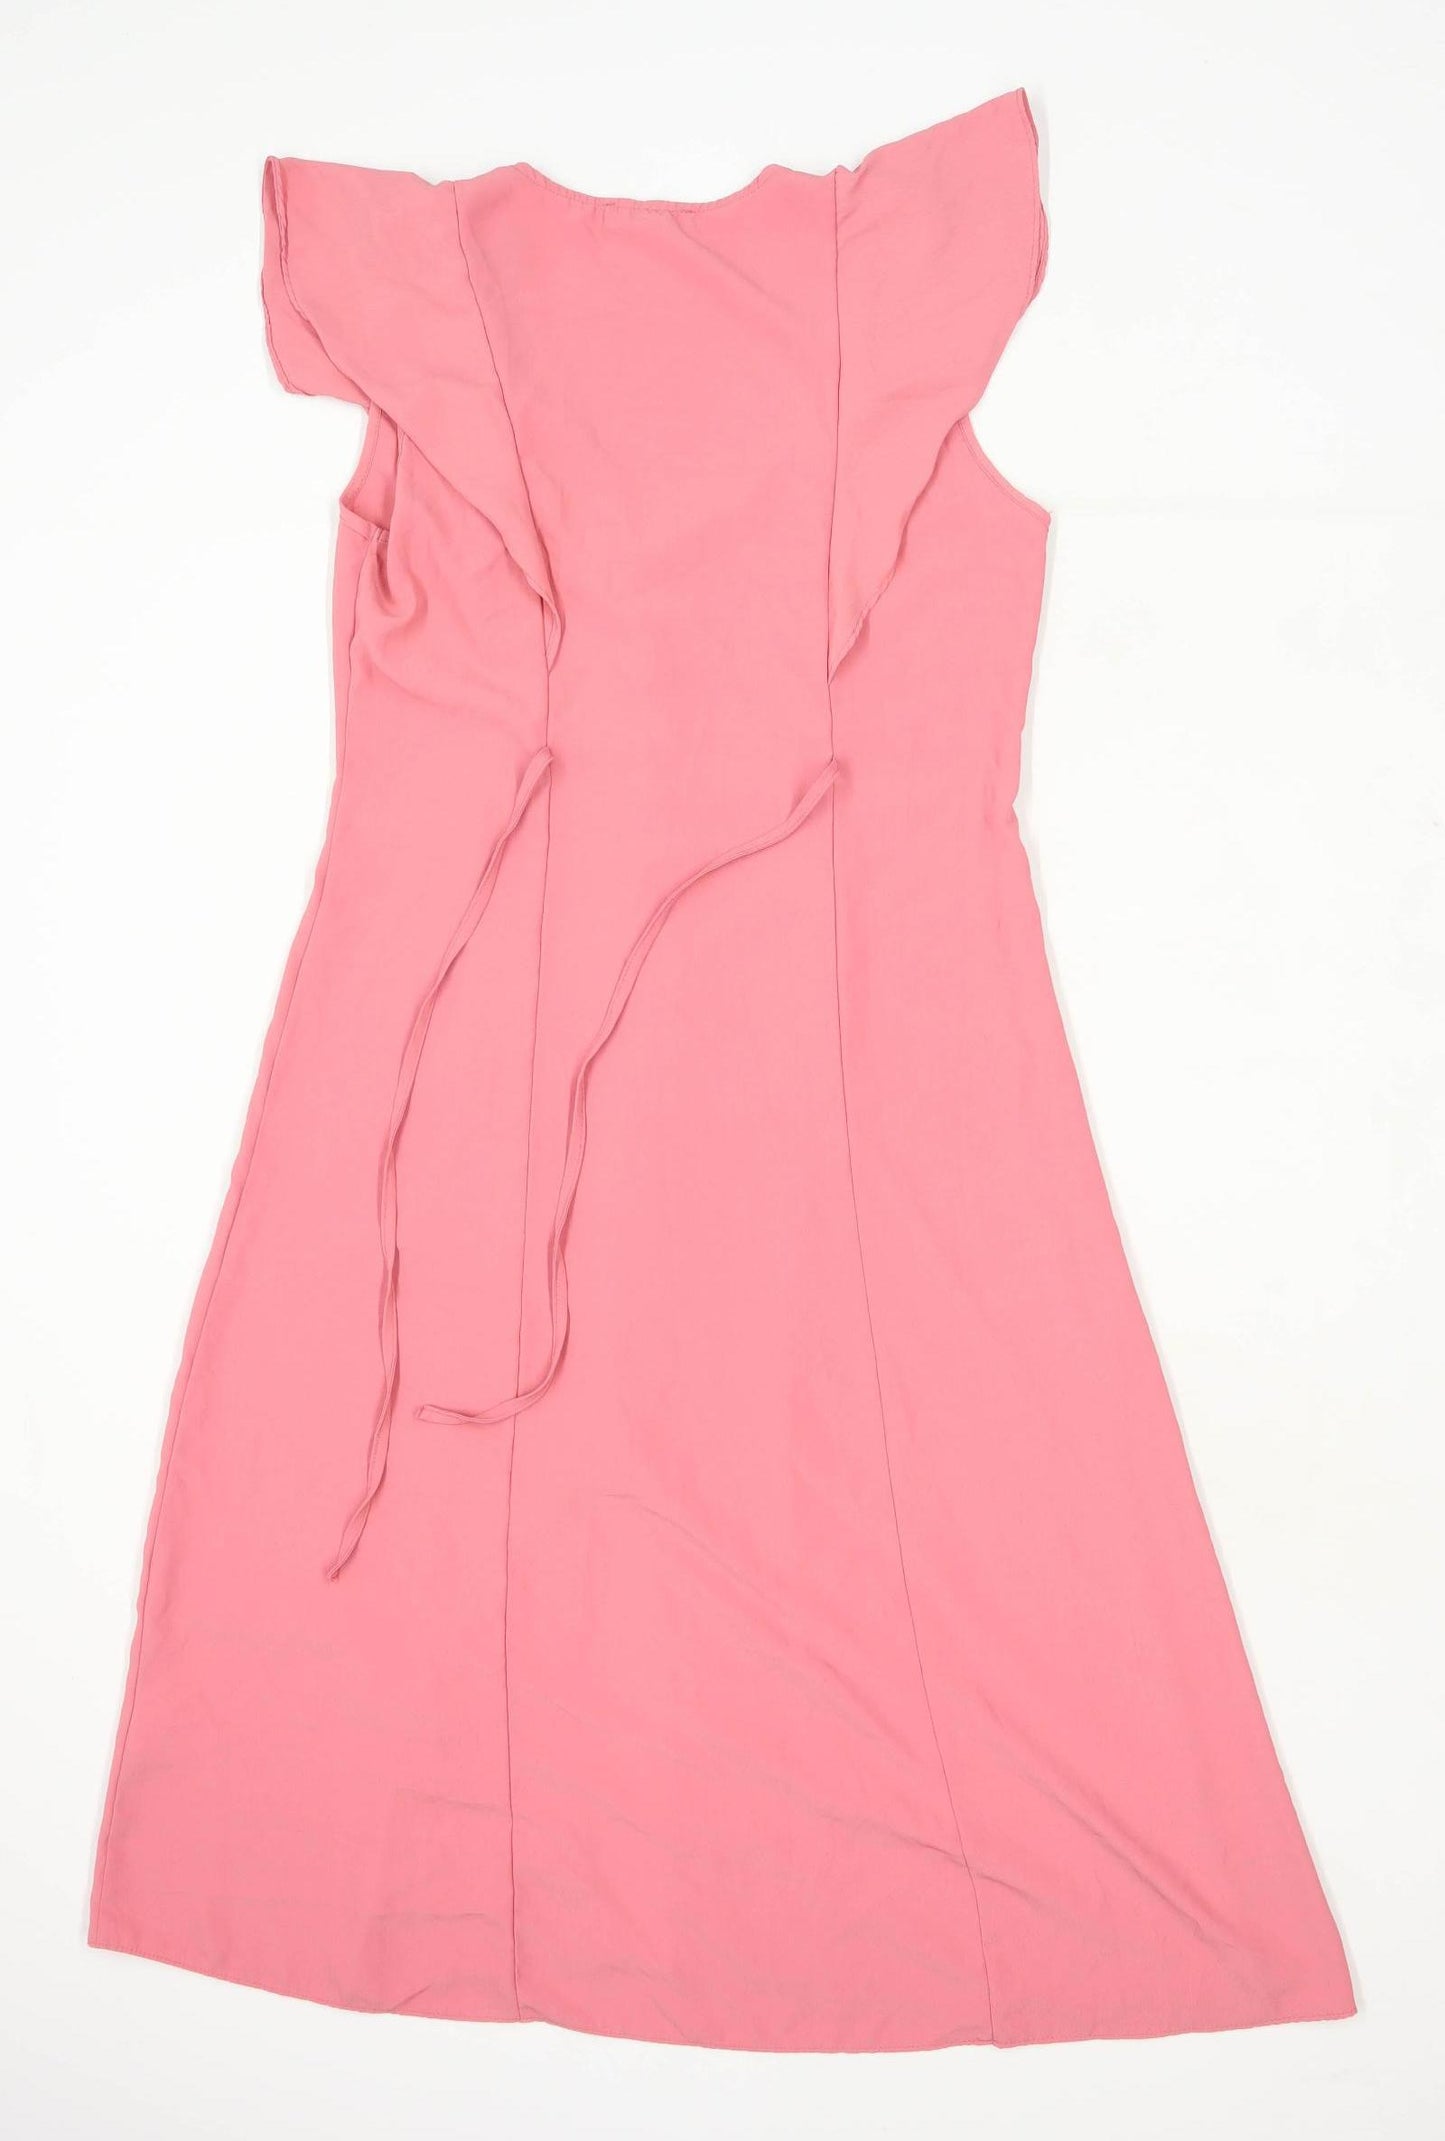 Primark Womens Size 10 Pink Shirt Dress (Regular)